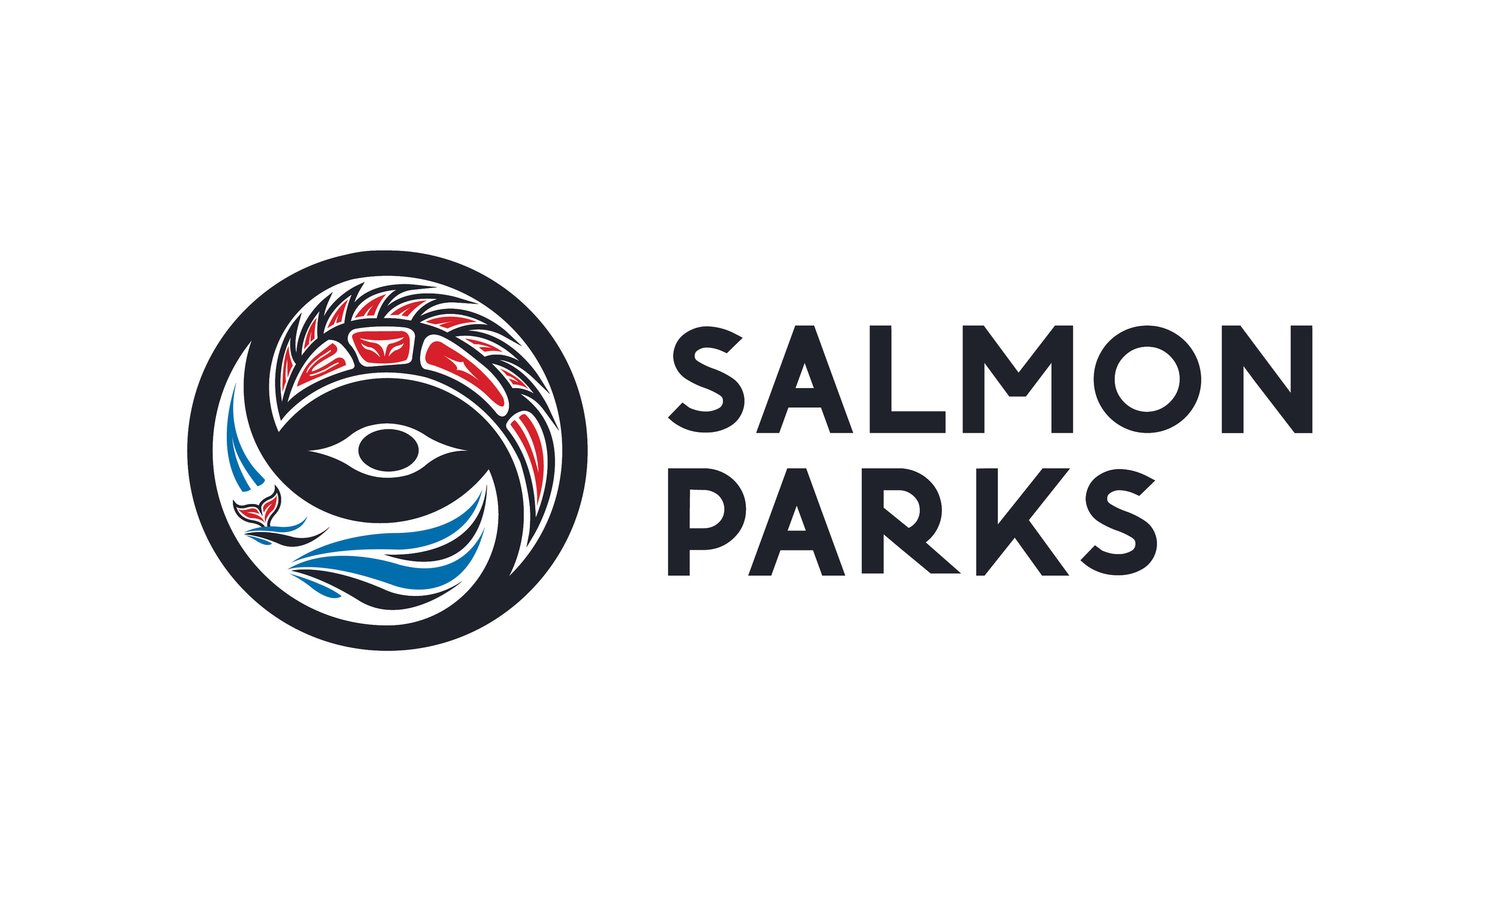 Salmon Parks